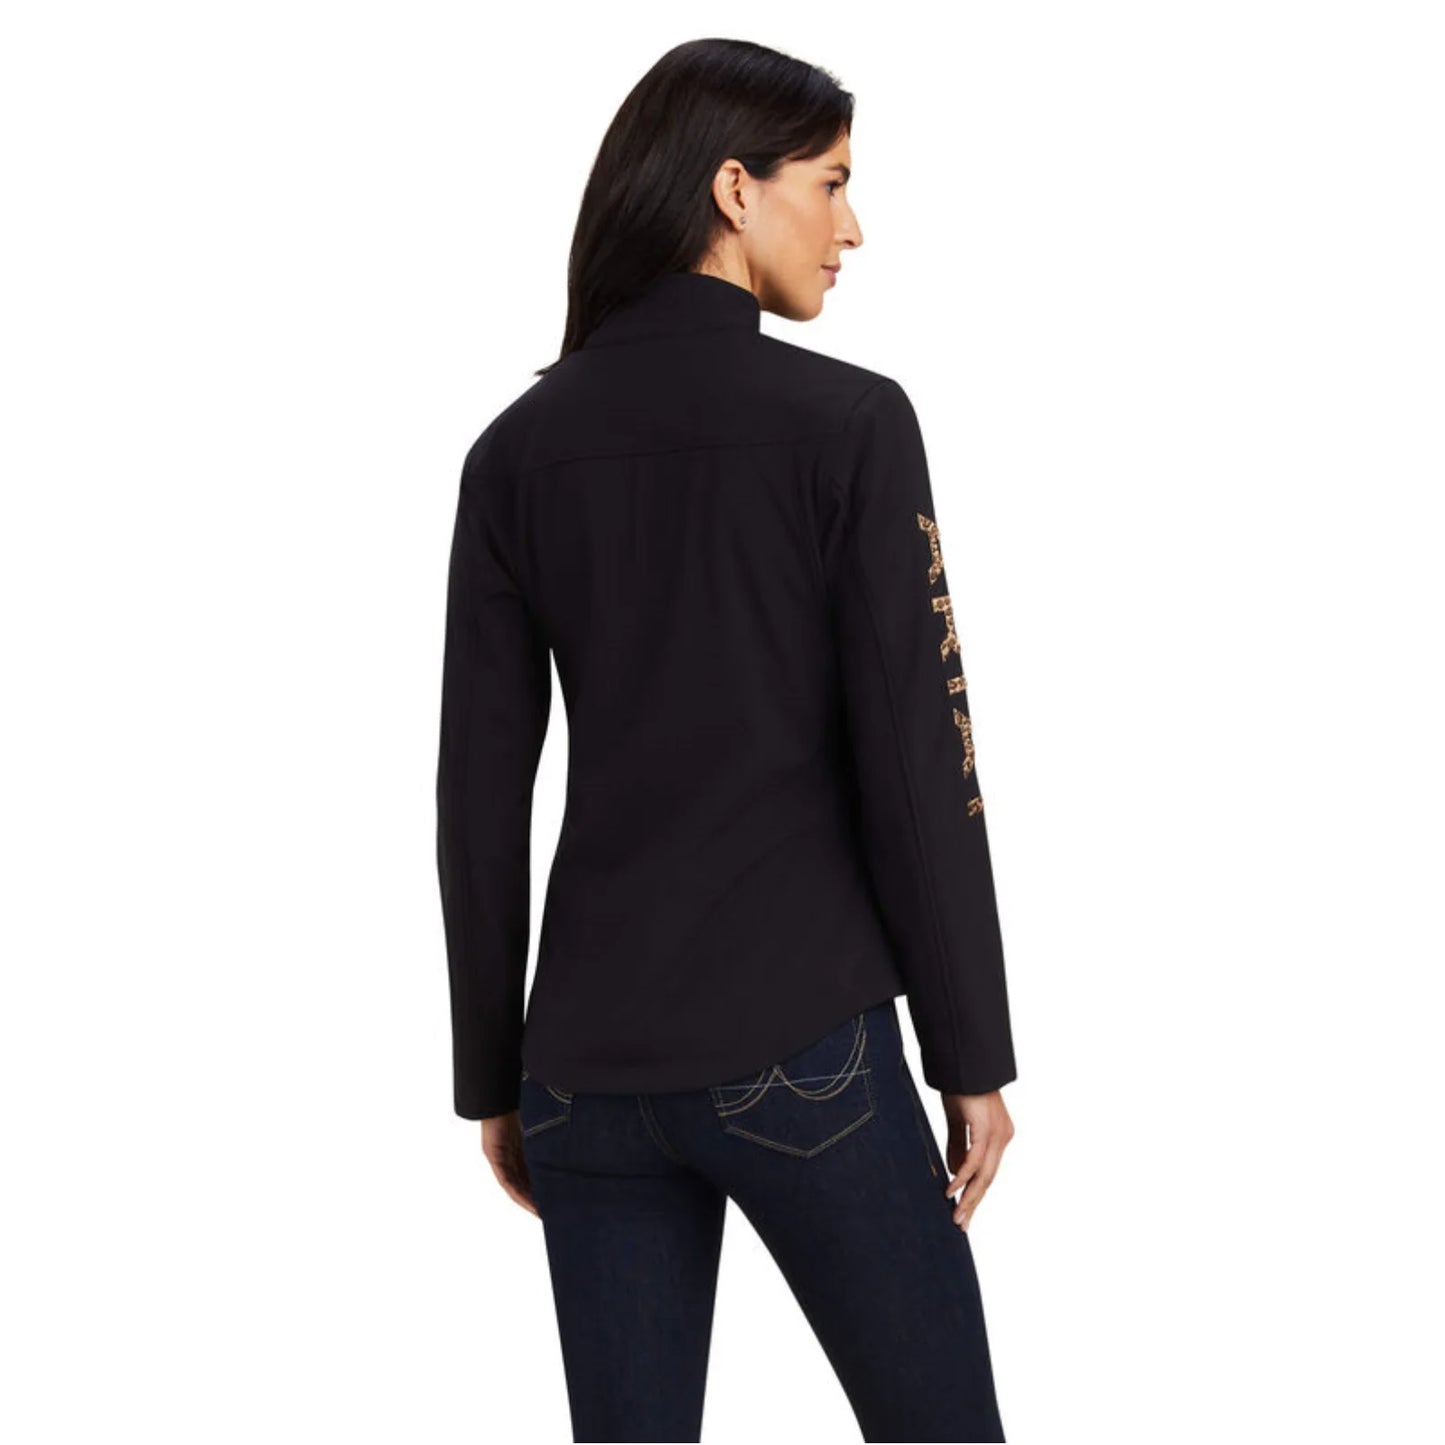 Ariat® Ladies New Team Softshell Black & Leopard Jacket 10041278